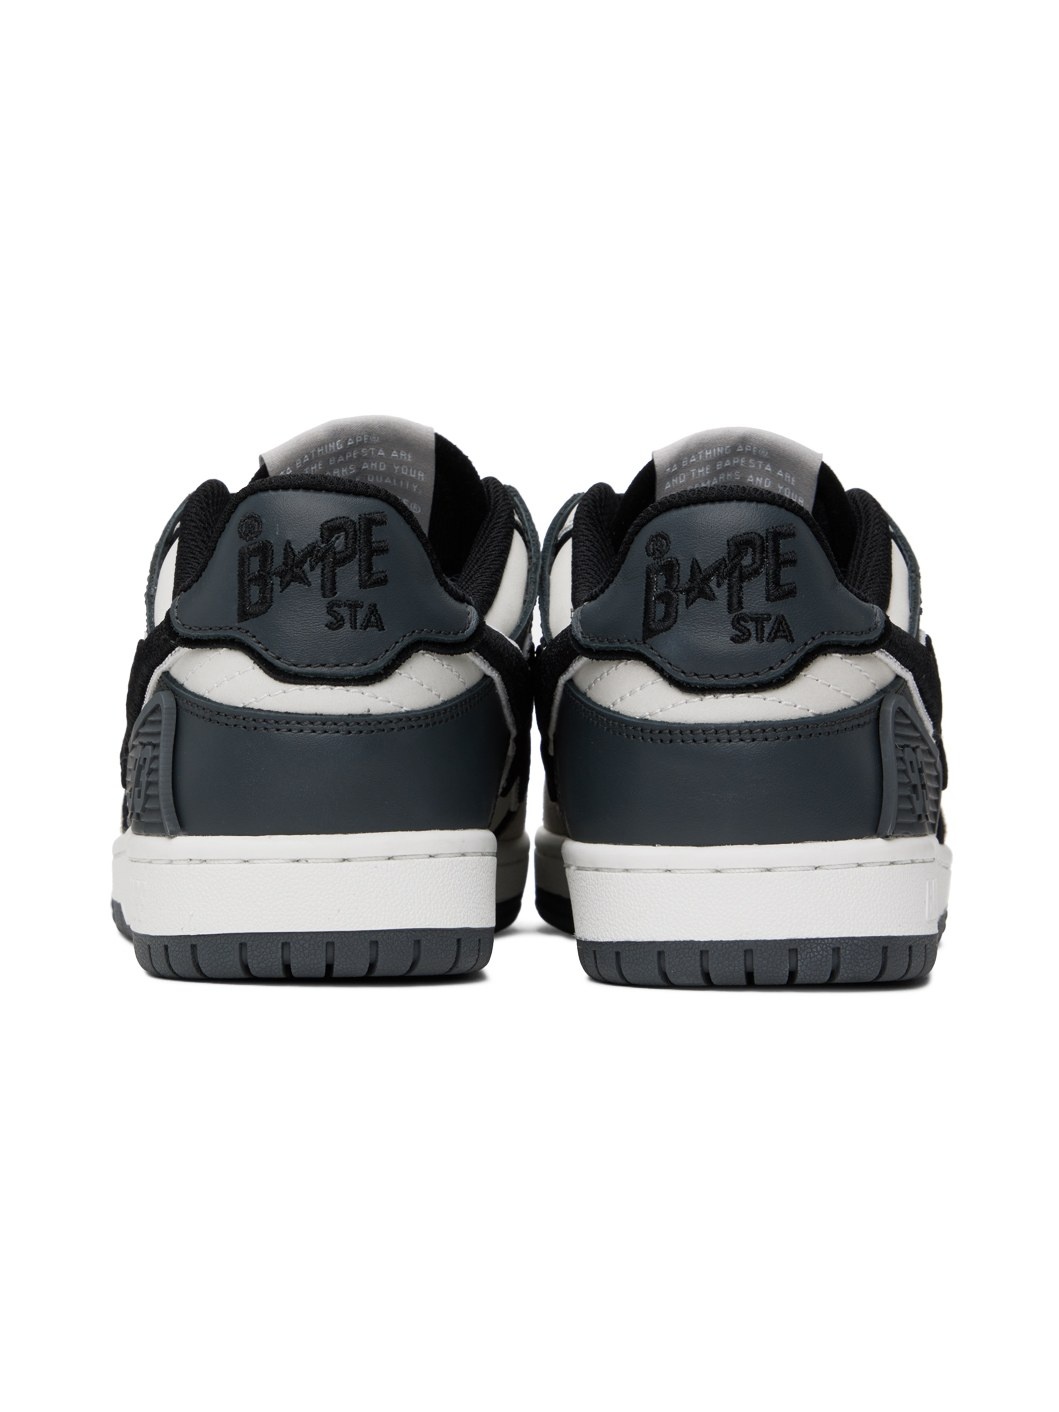 Gray & Black STA #5 Sneakers - 2